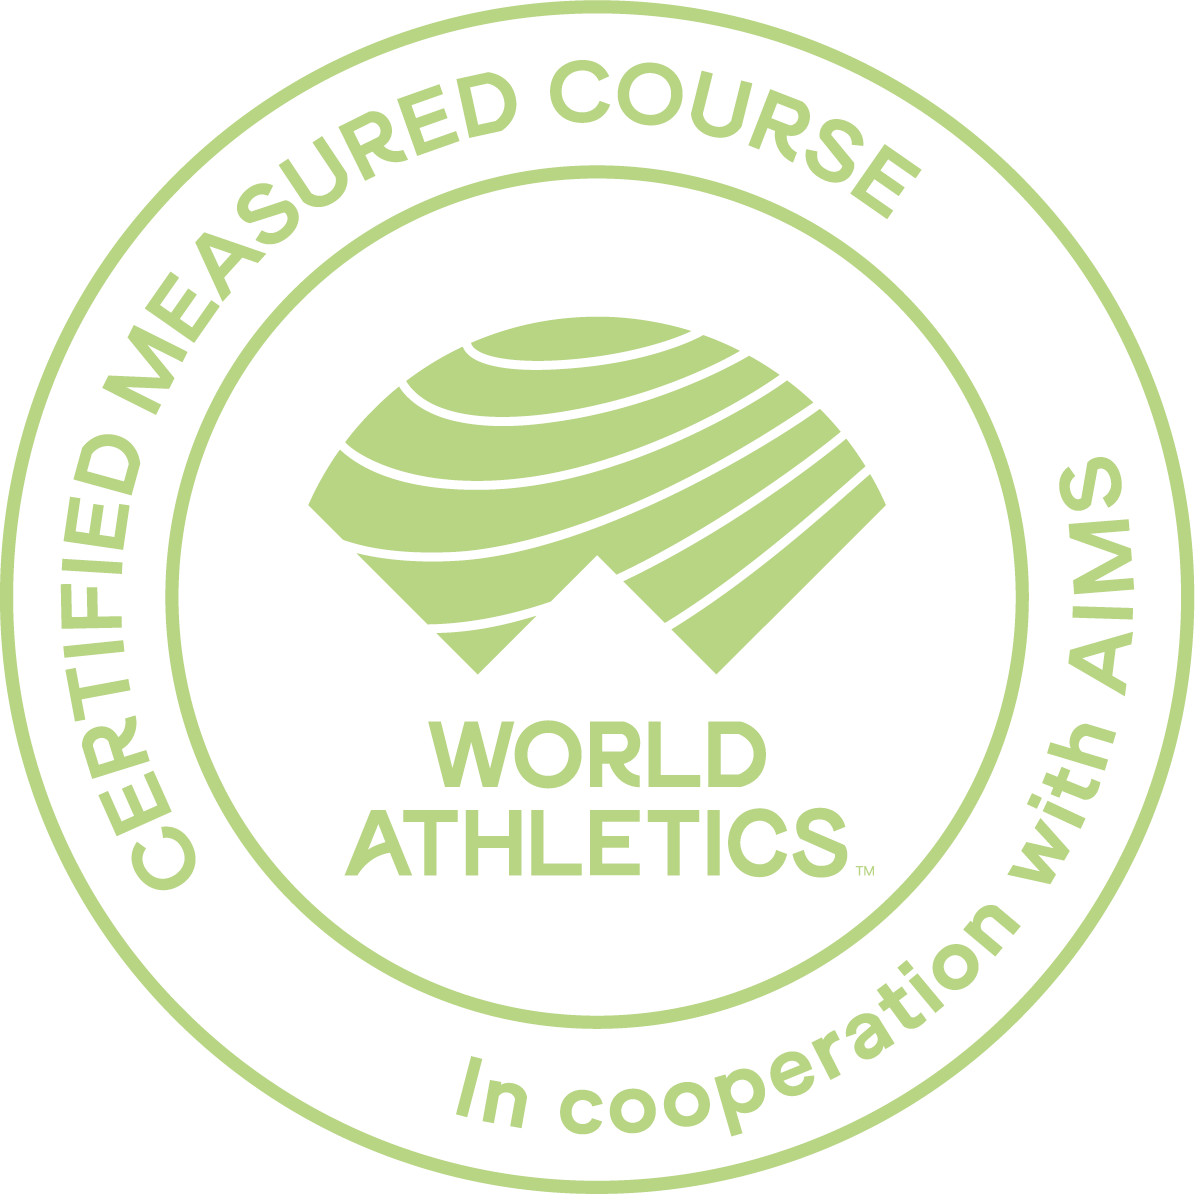 Certified Measurment Certificate WORLD ATHLETICS 